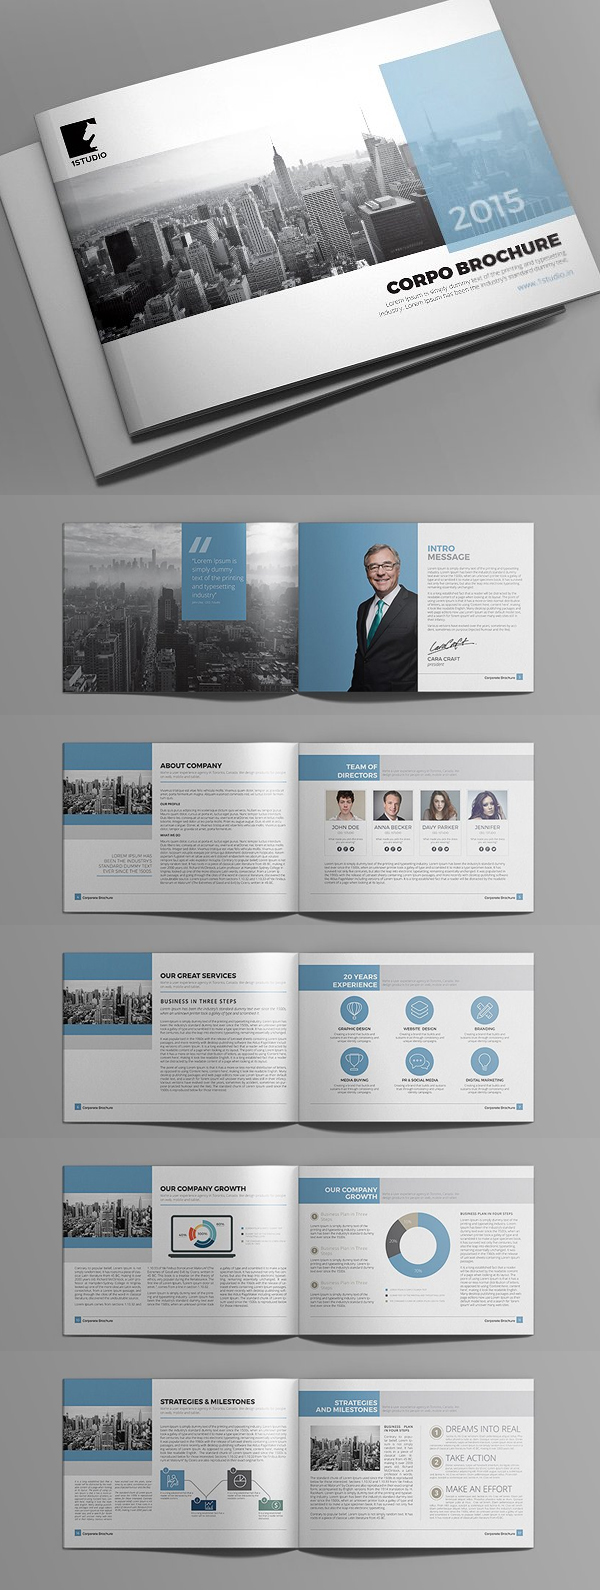 100 Professional Corporate Brochure Templates - 18